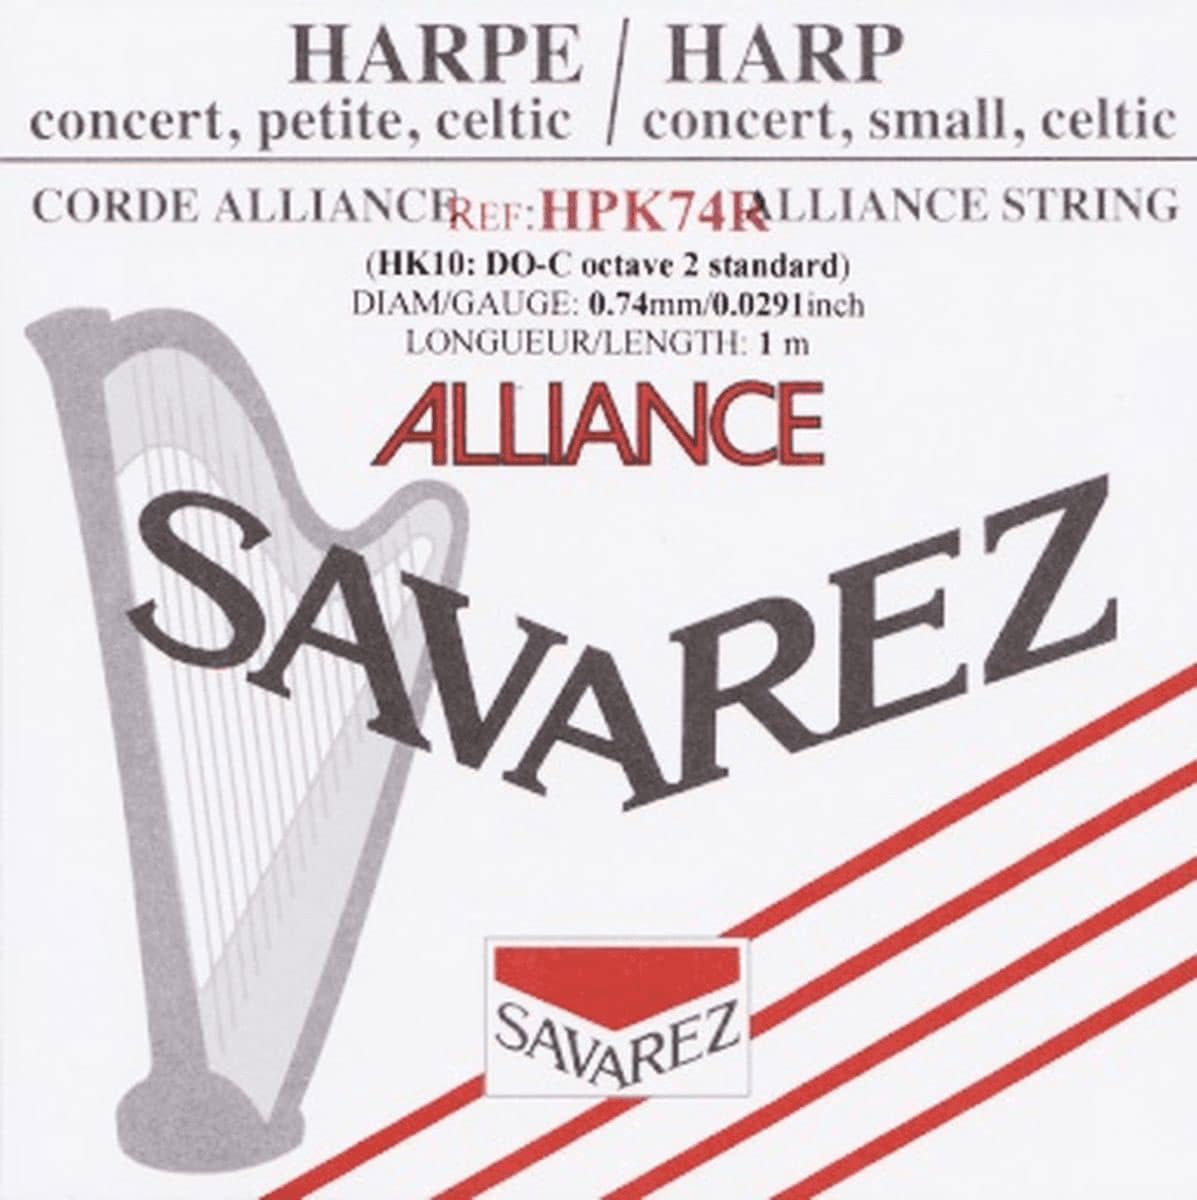 SAVAREZ HARP ALLIANCE STRING DIAMETER 0,74MM RED